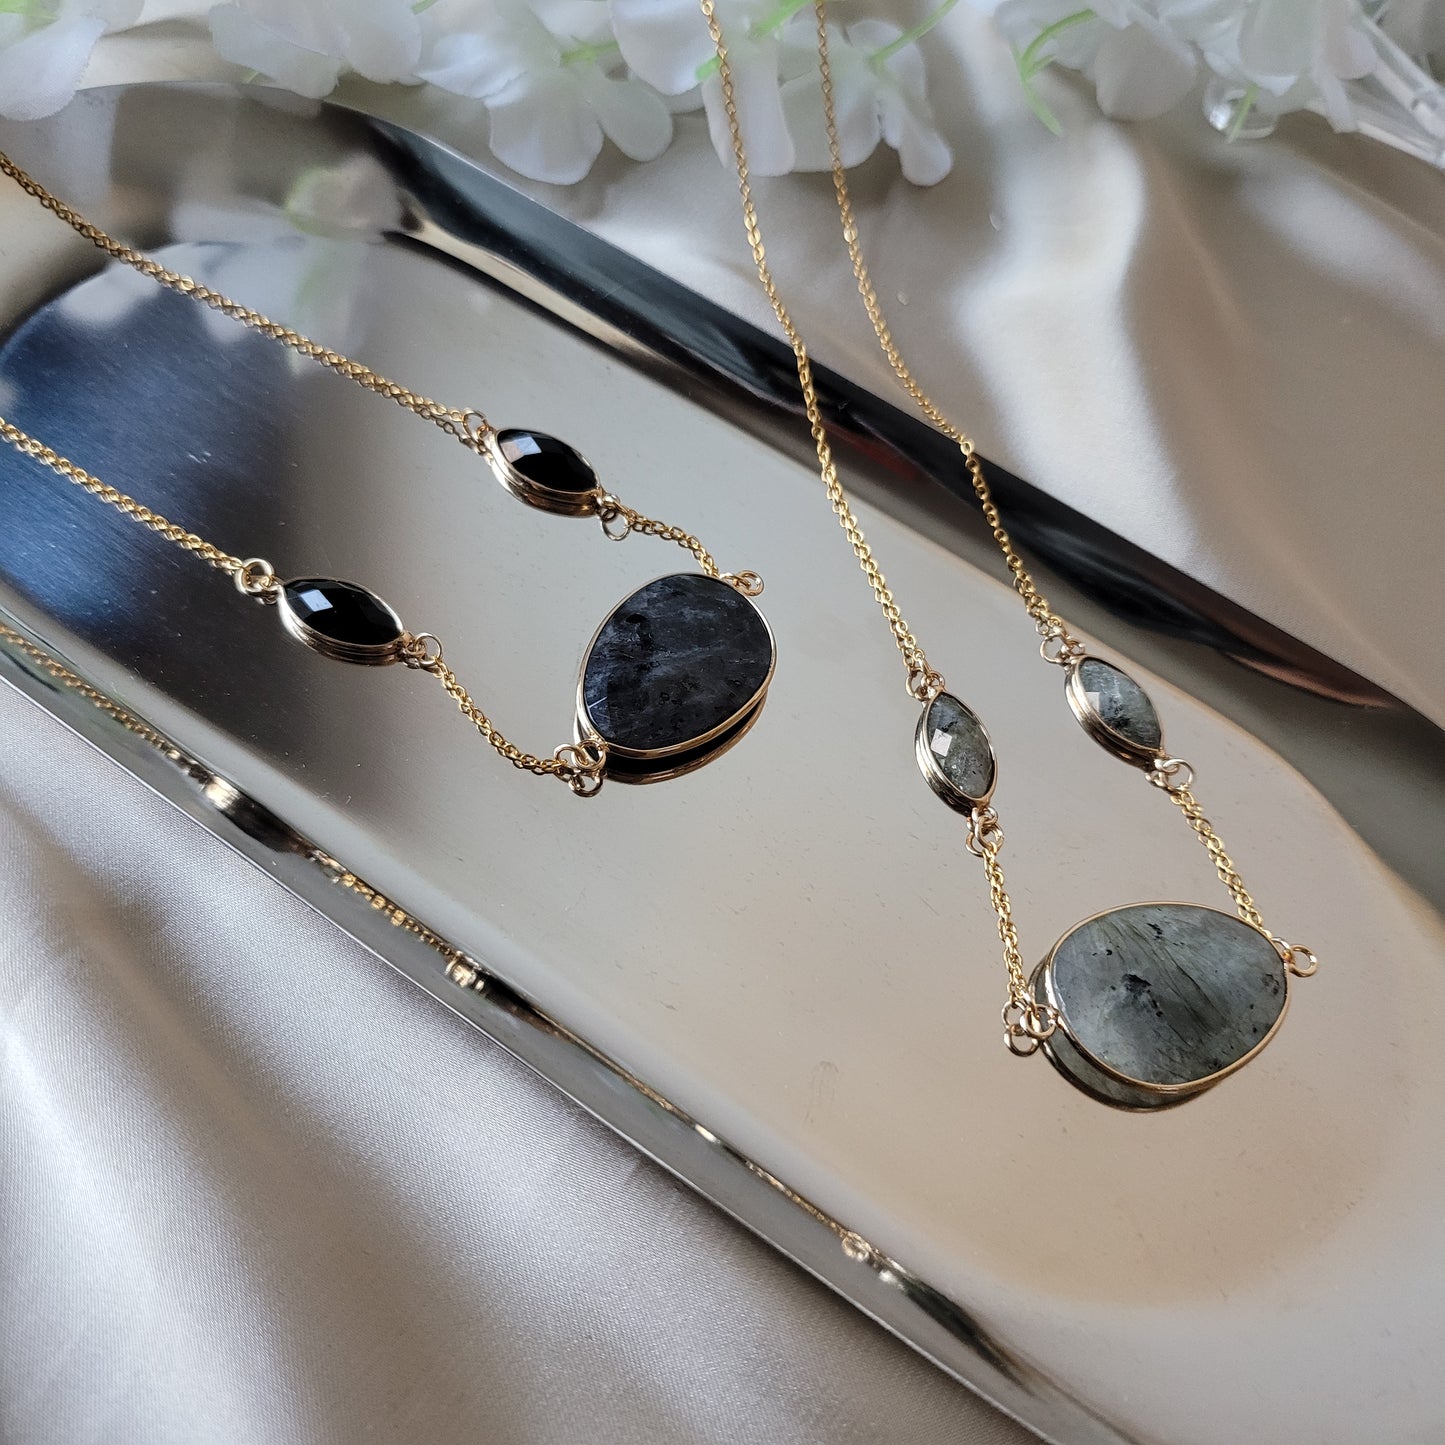 SHAIMINA - Exquisite Combo Rock Stone Natural Semi Precious Stone Crystal Gemstone Design Pendant Necklace  - Long Matinee Hijab Hijabi Gold Chain - Trending Jewellery  '23